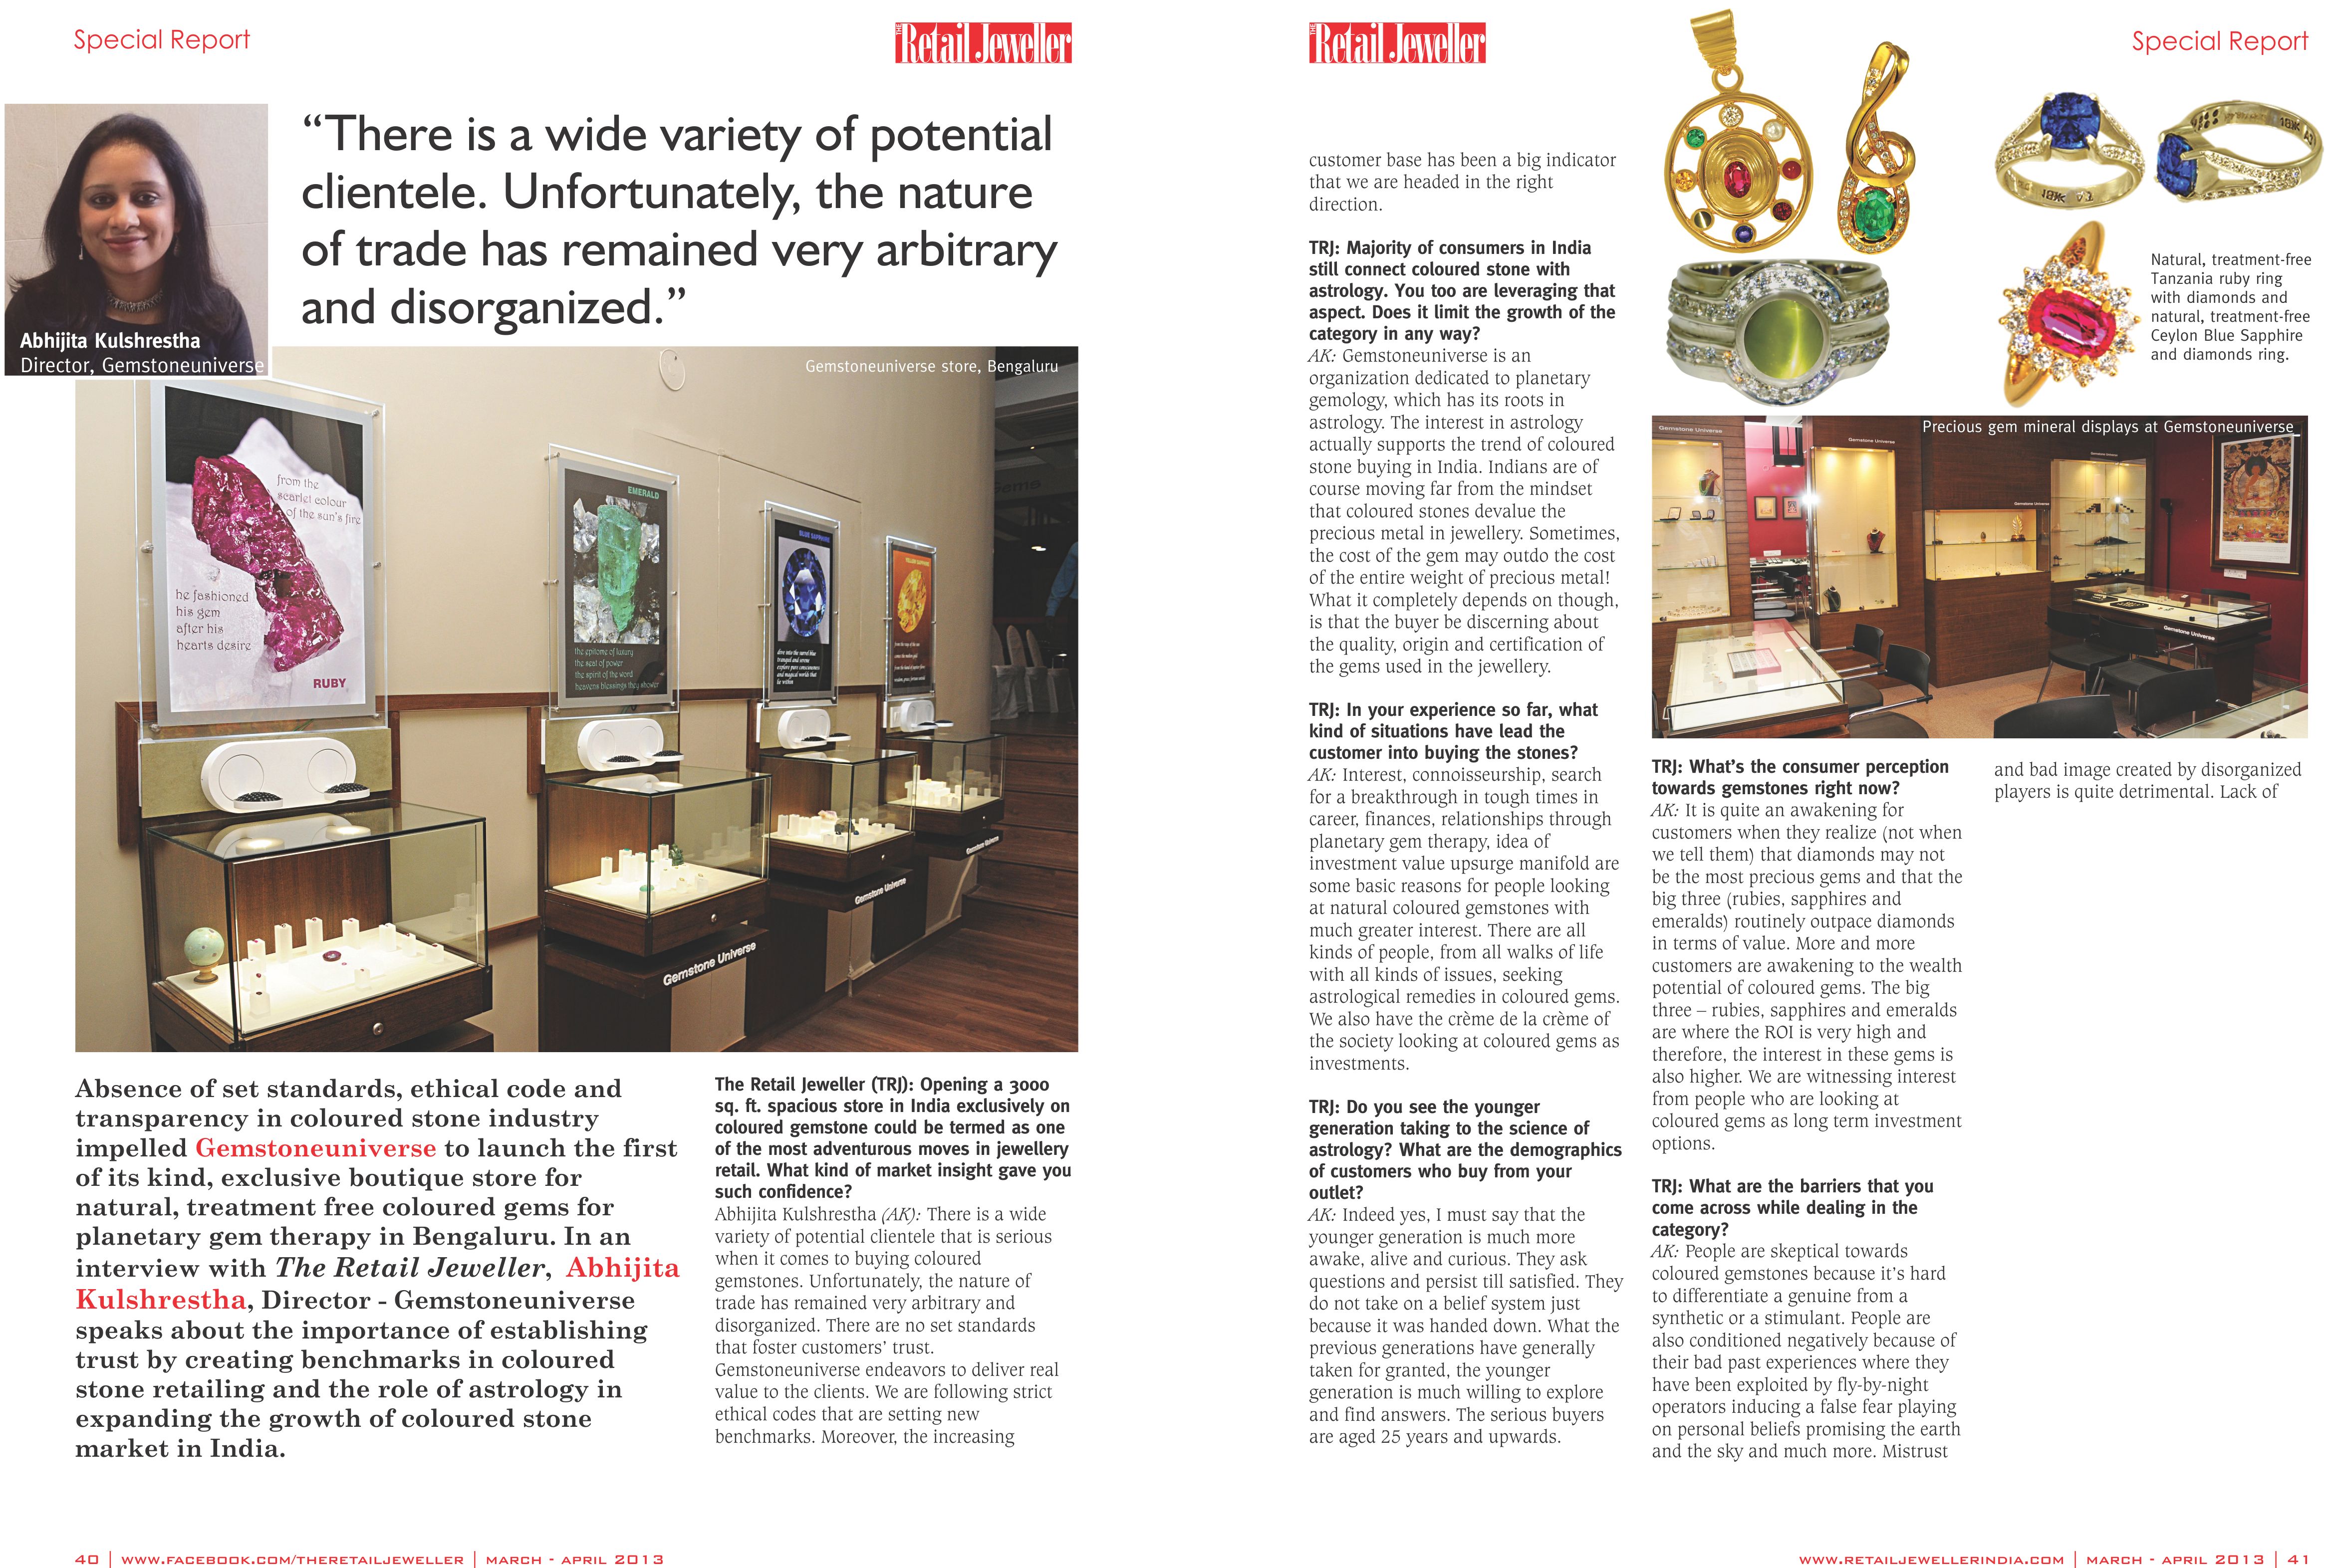 Gemstoneuniverse featured in the Retail Jeweler Magazine